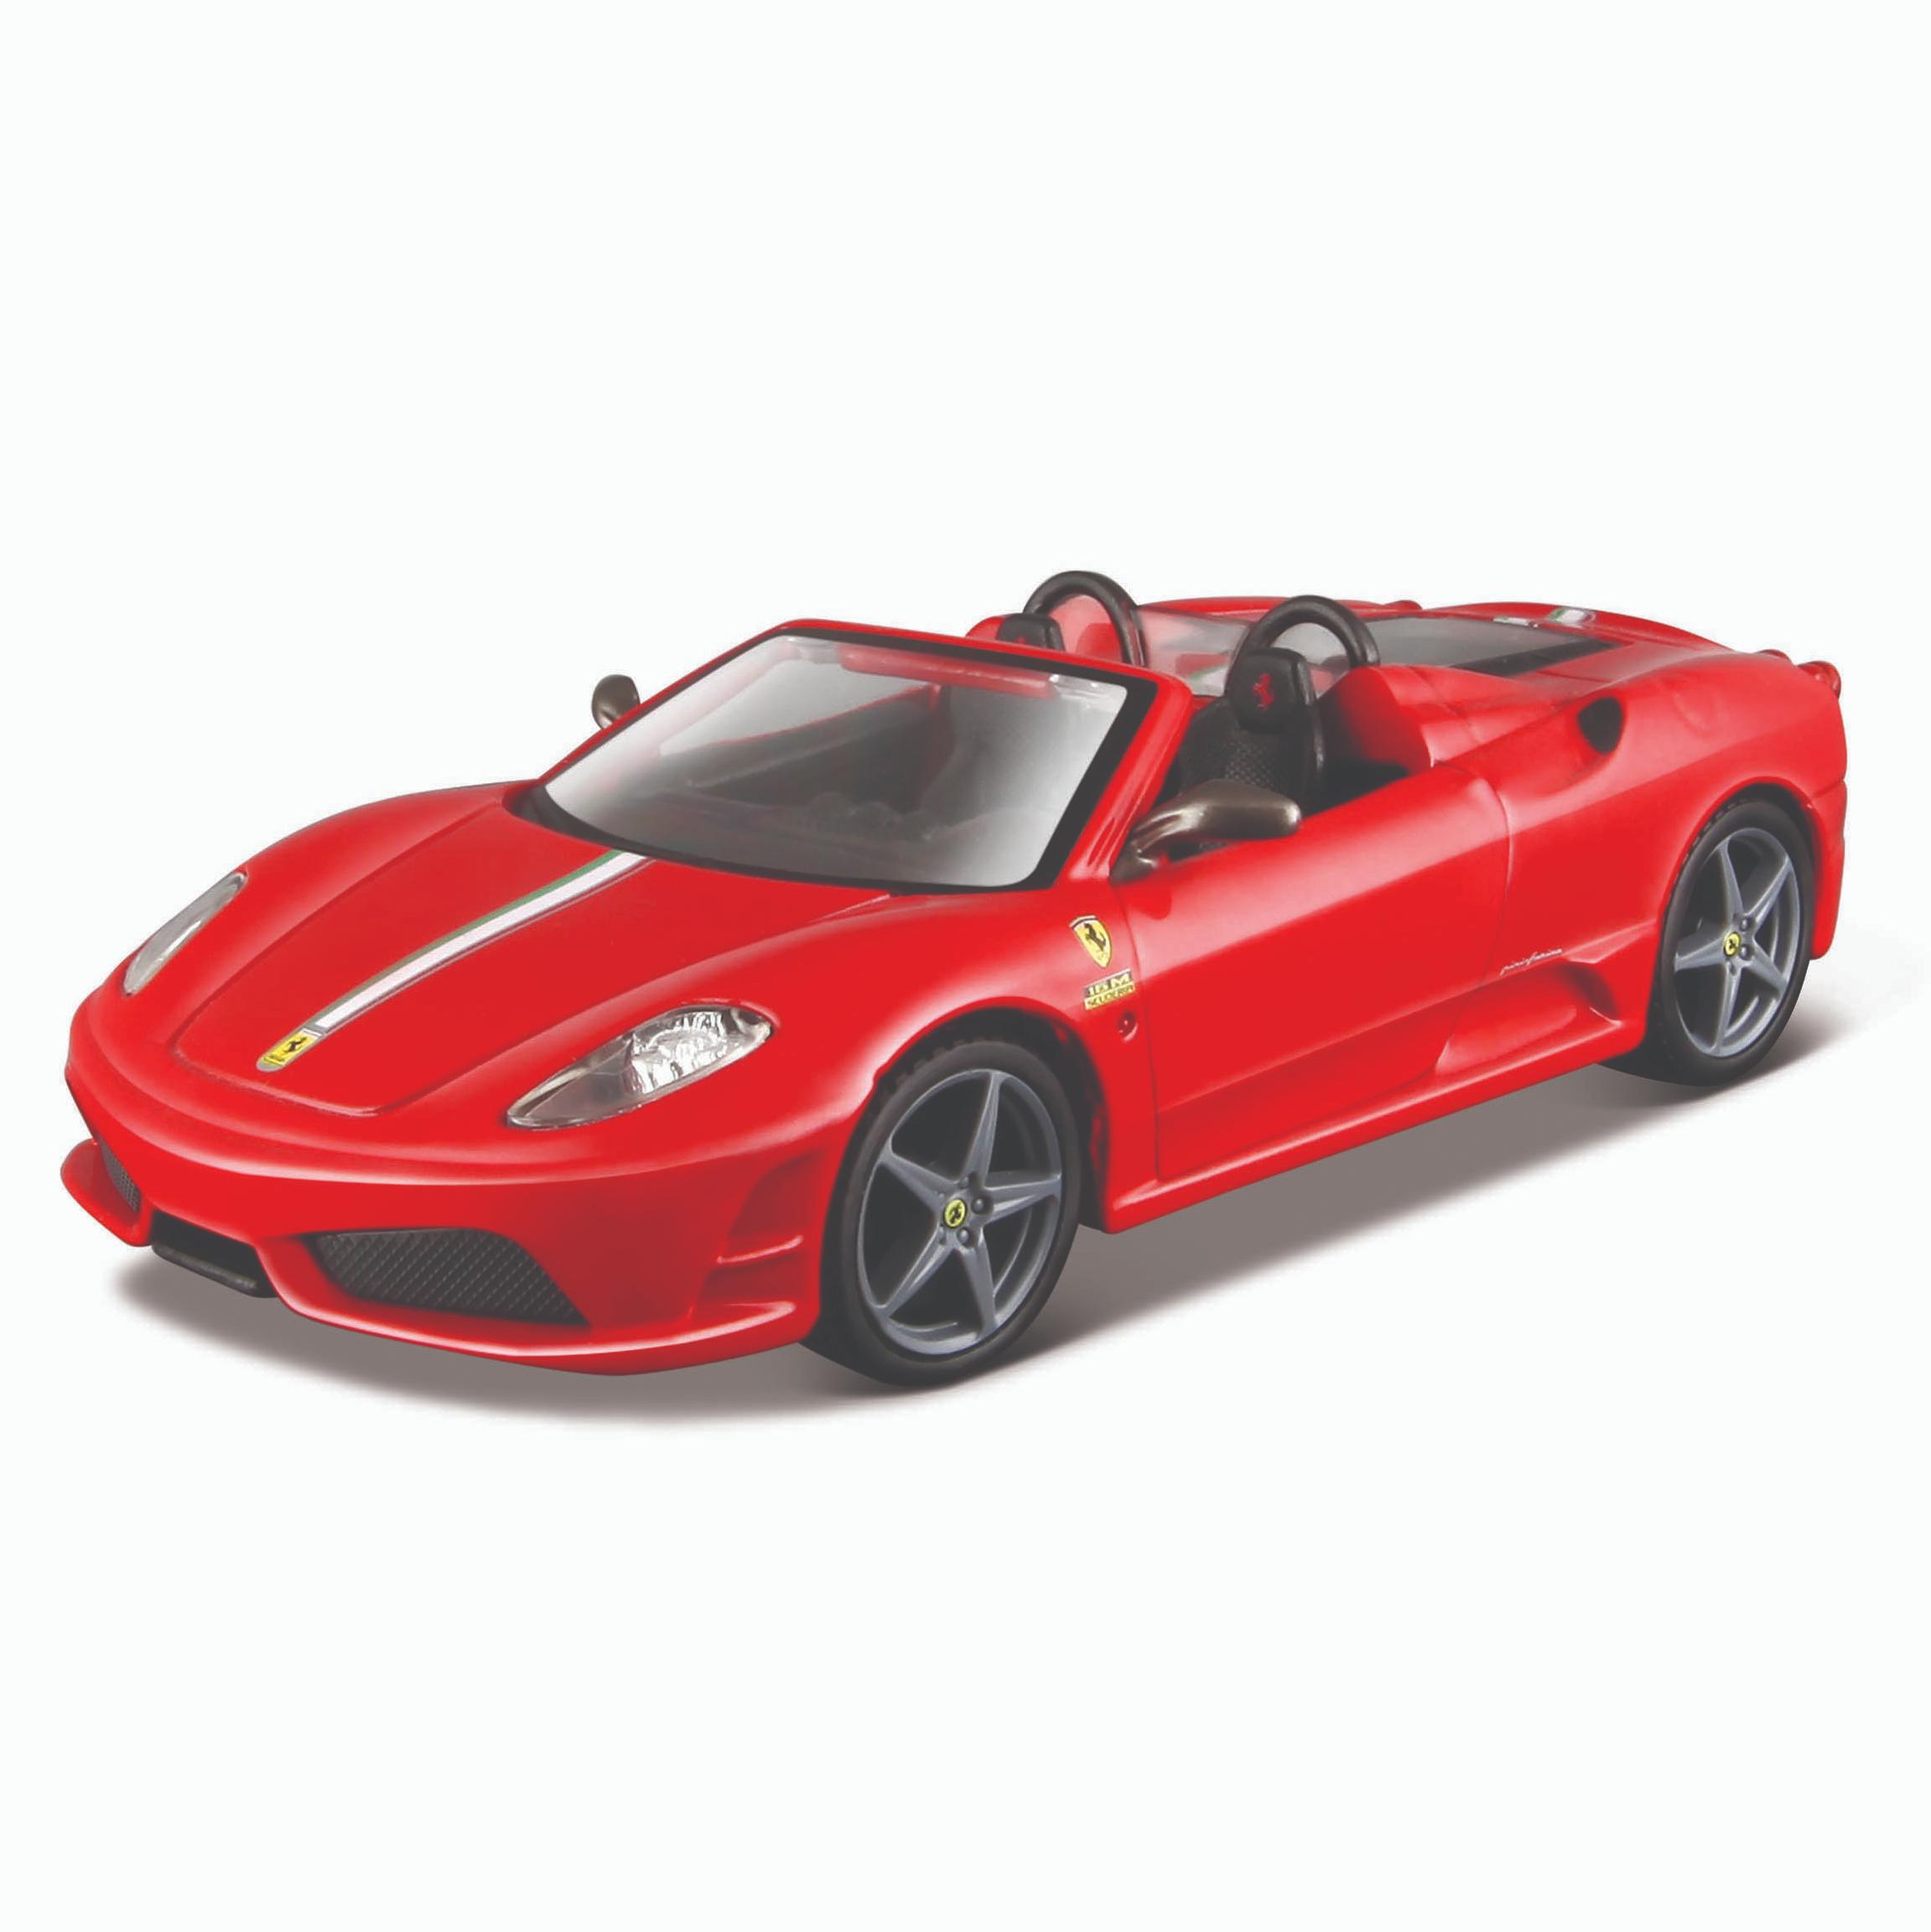 Коллекционная машинка Bburago Феррари 1:32 Ferrari R&P-Ferrari Scuderia Spider 16M,красная bburago 1 18 ferrari 70th anniversary ferrari sf70h 2017 f1 racing model alloy car model collect gifts toy